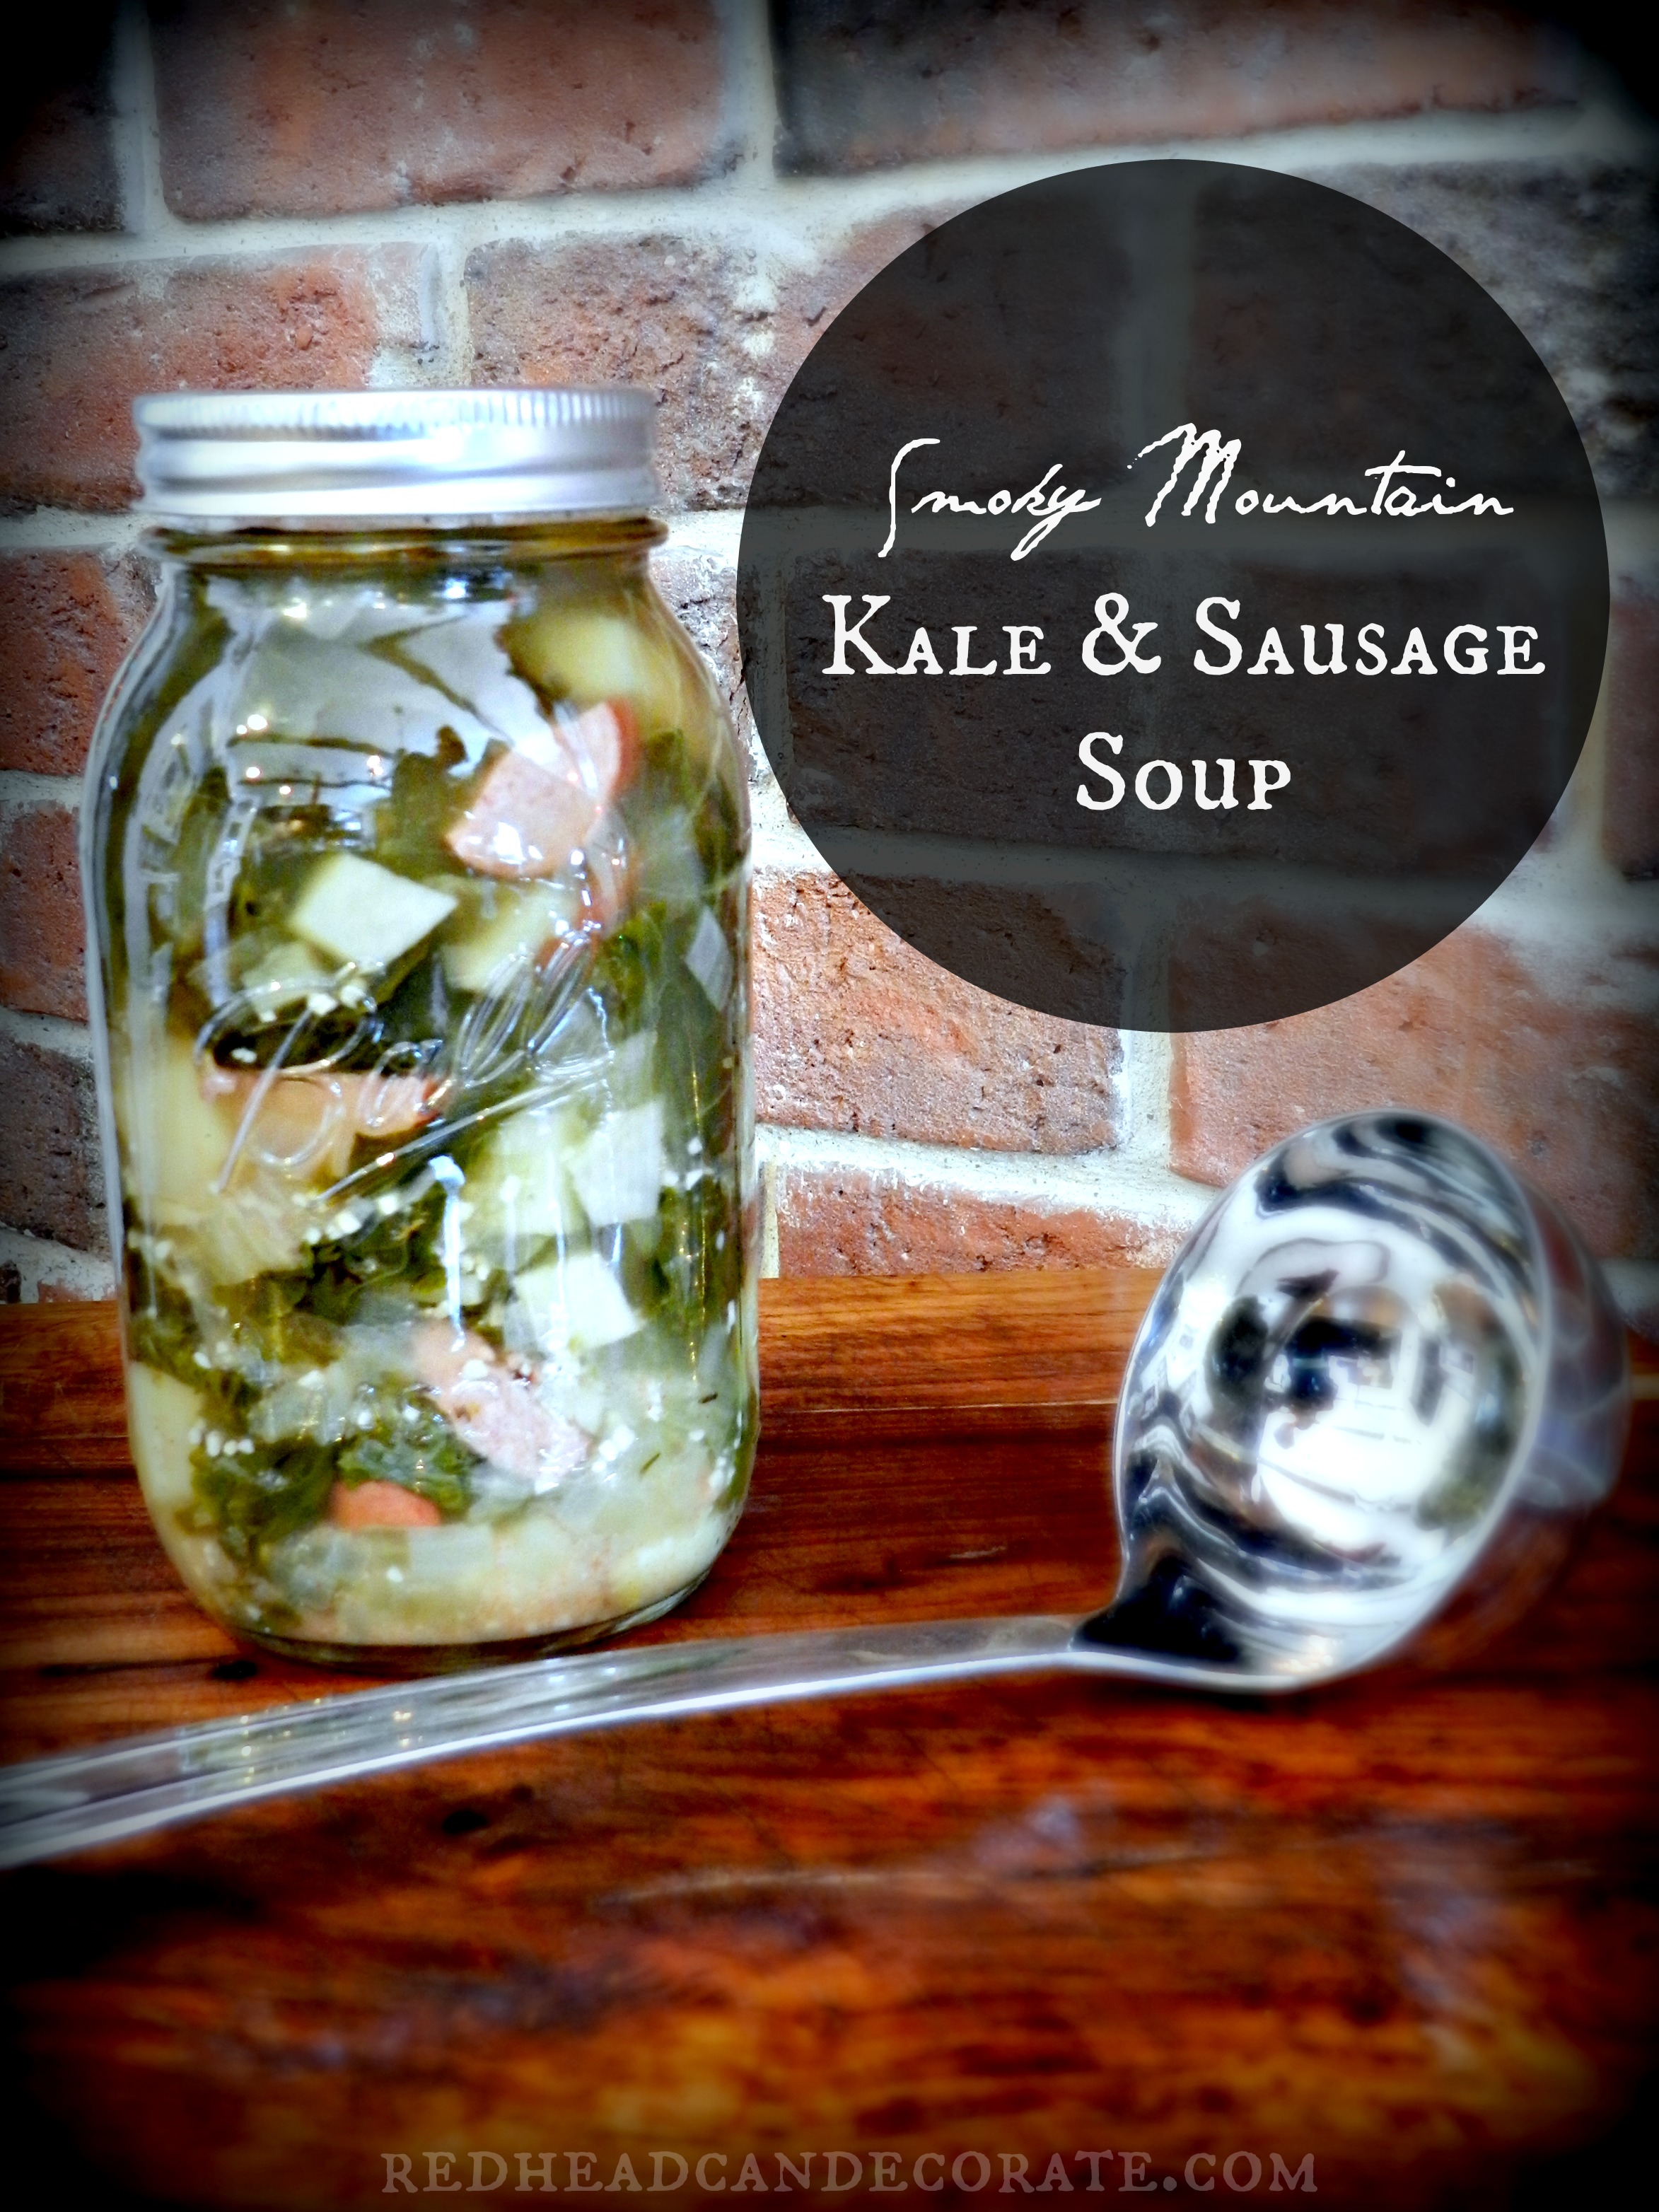 Smoky Mountain Kale & Sausage Soup-yum!